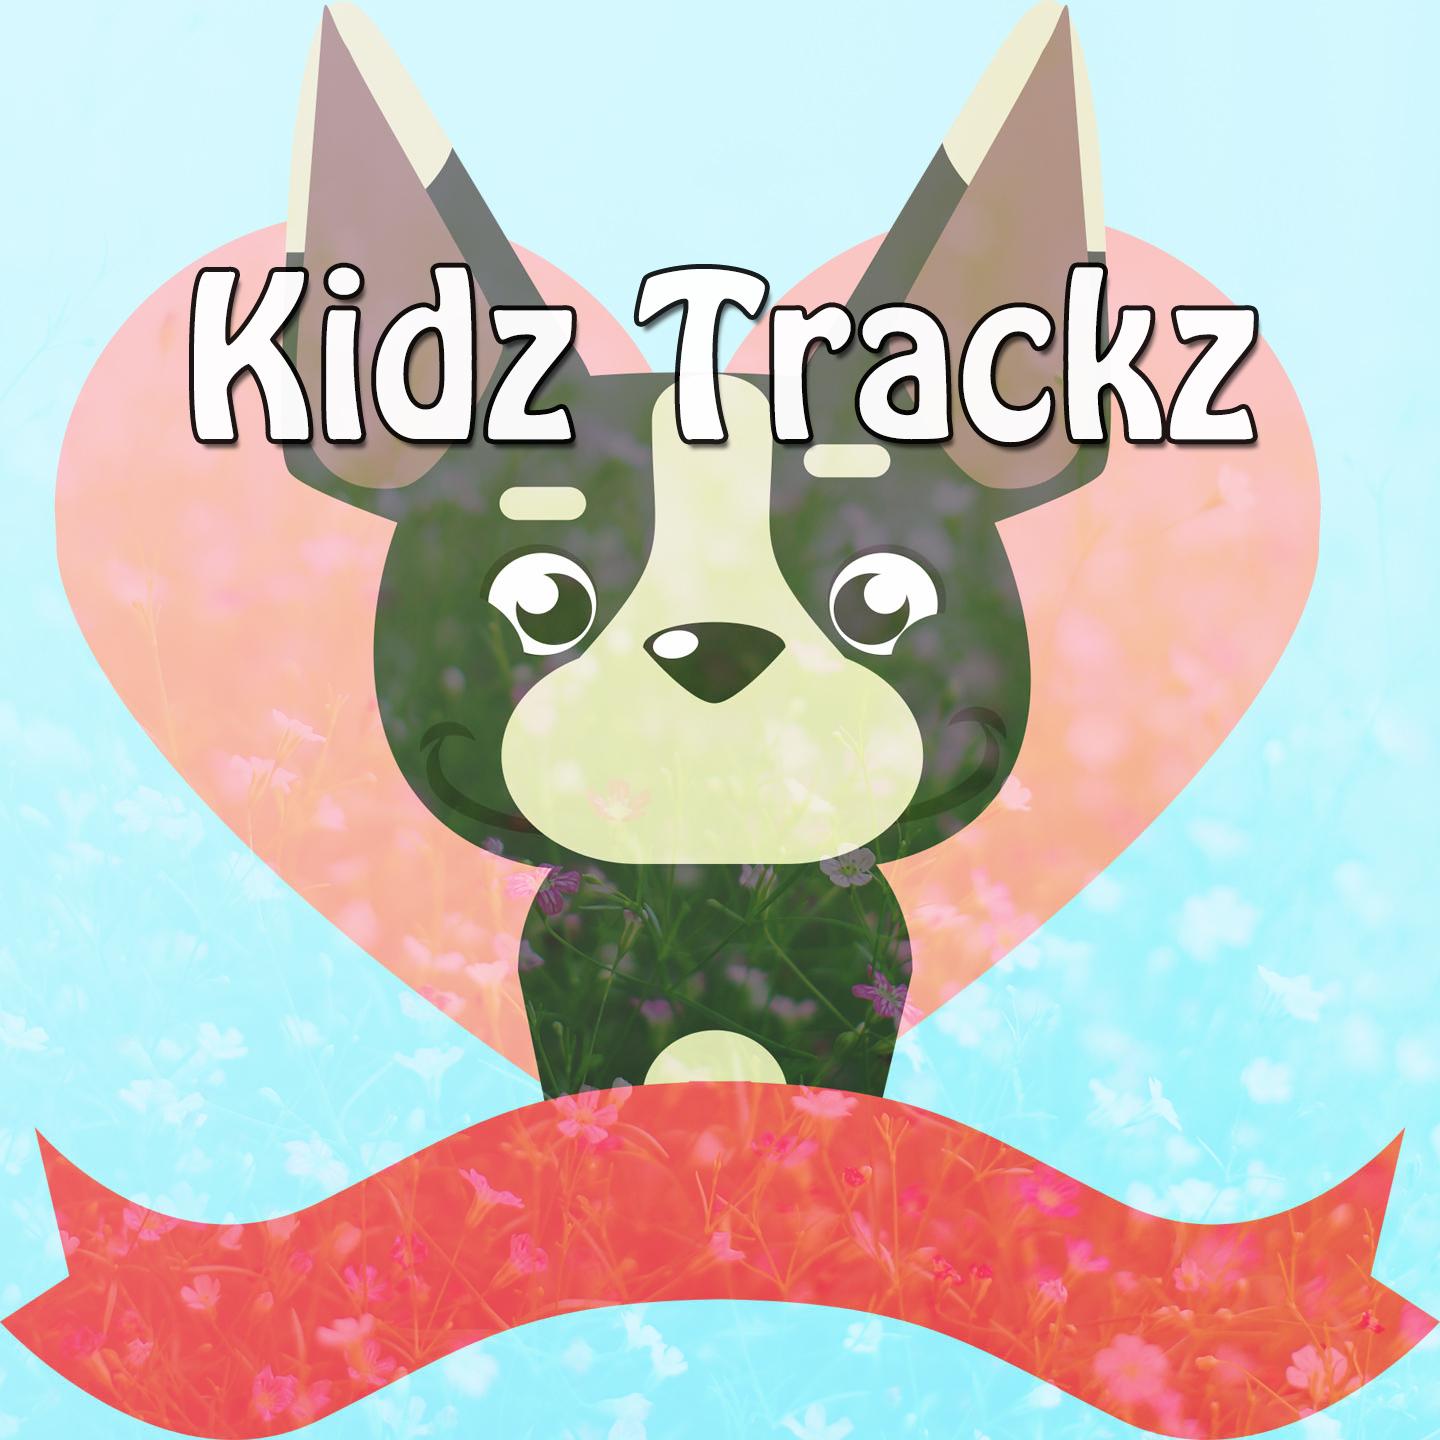 Kidz Trackz